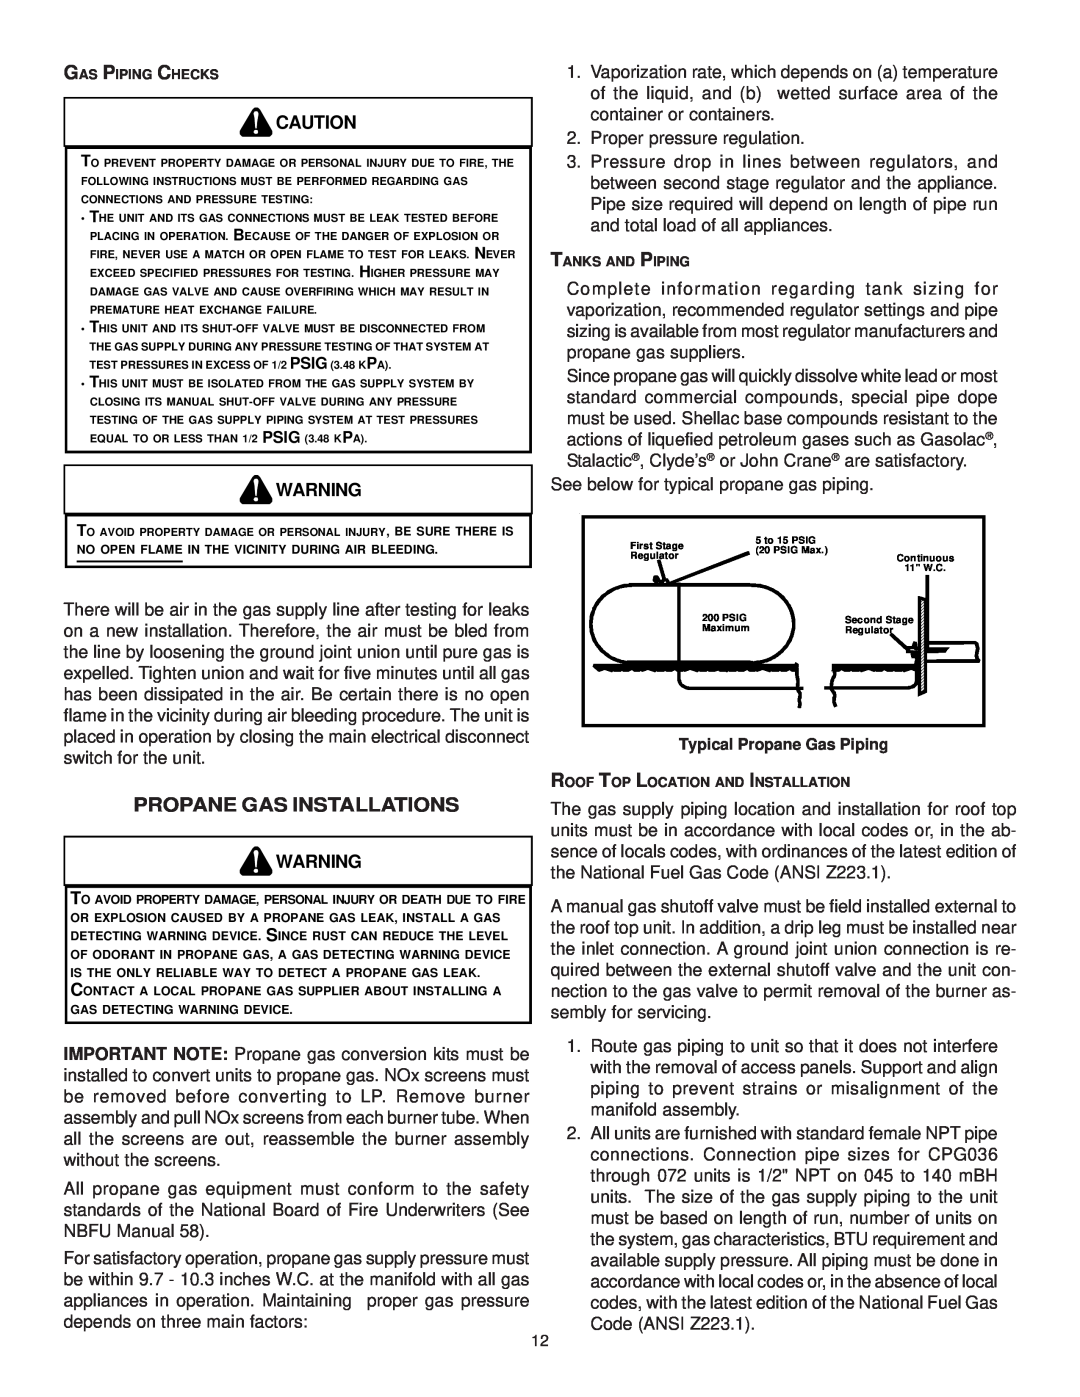 Goodman Mfg CPG SERIES installation manual Propane Gas Installations 